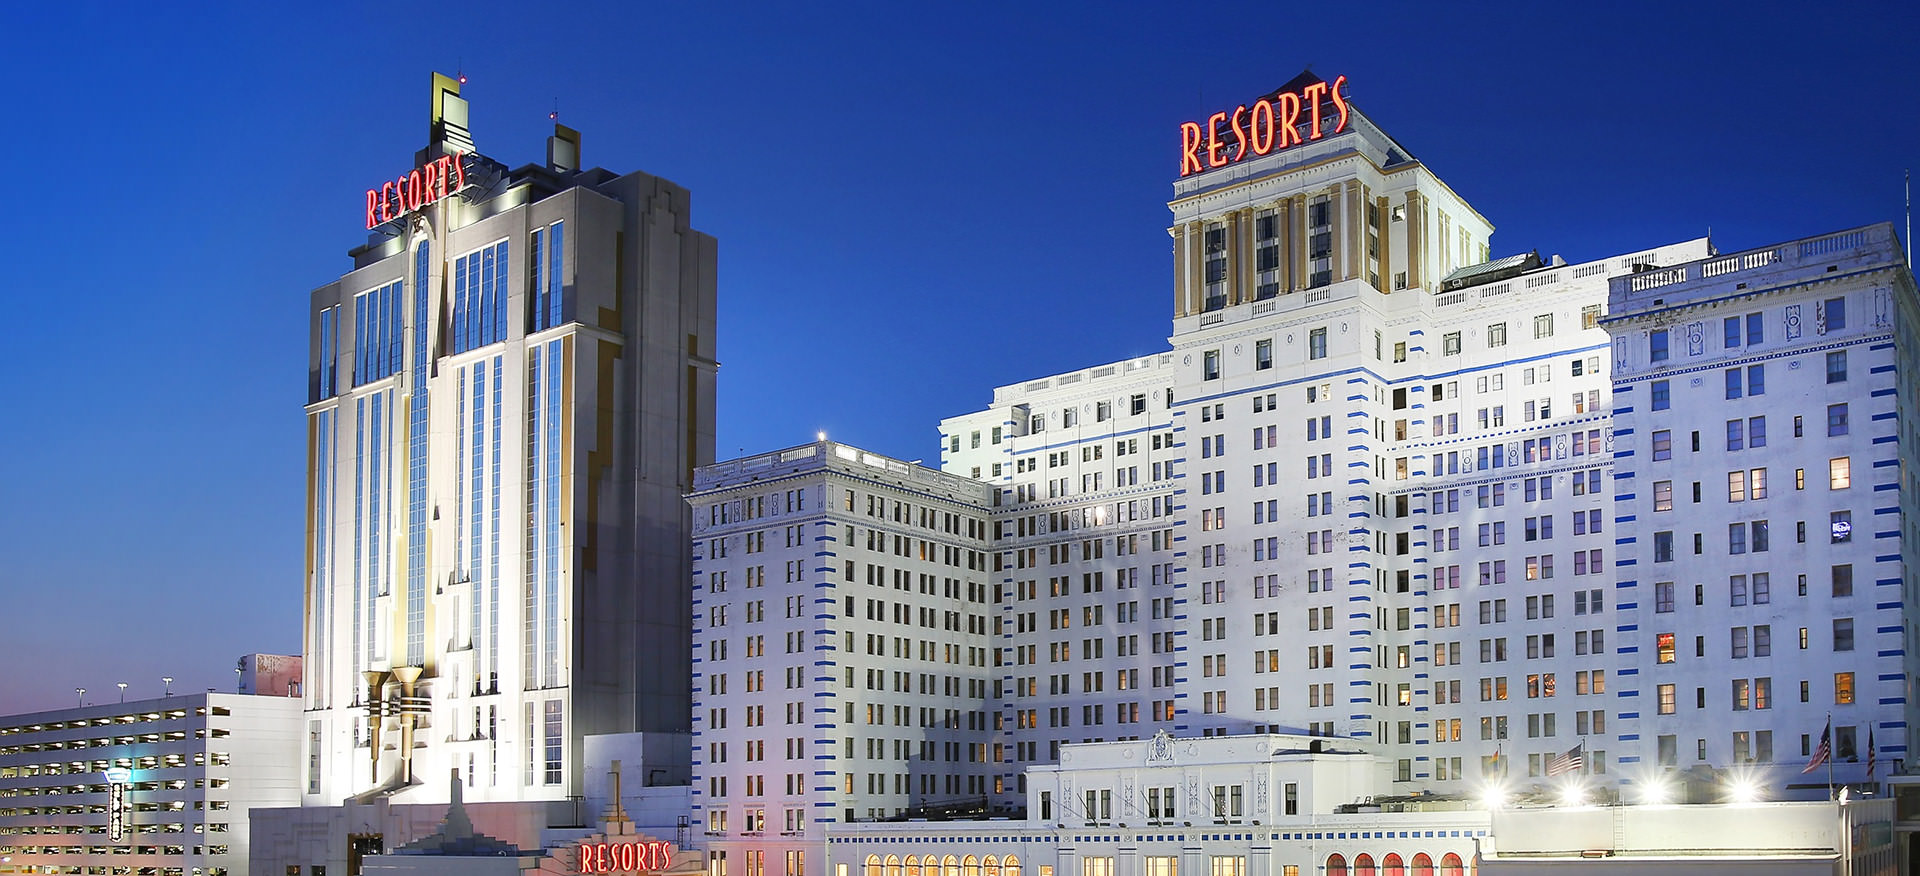 resorts international casino hotel atlantic city